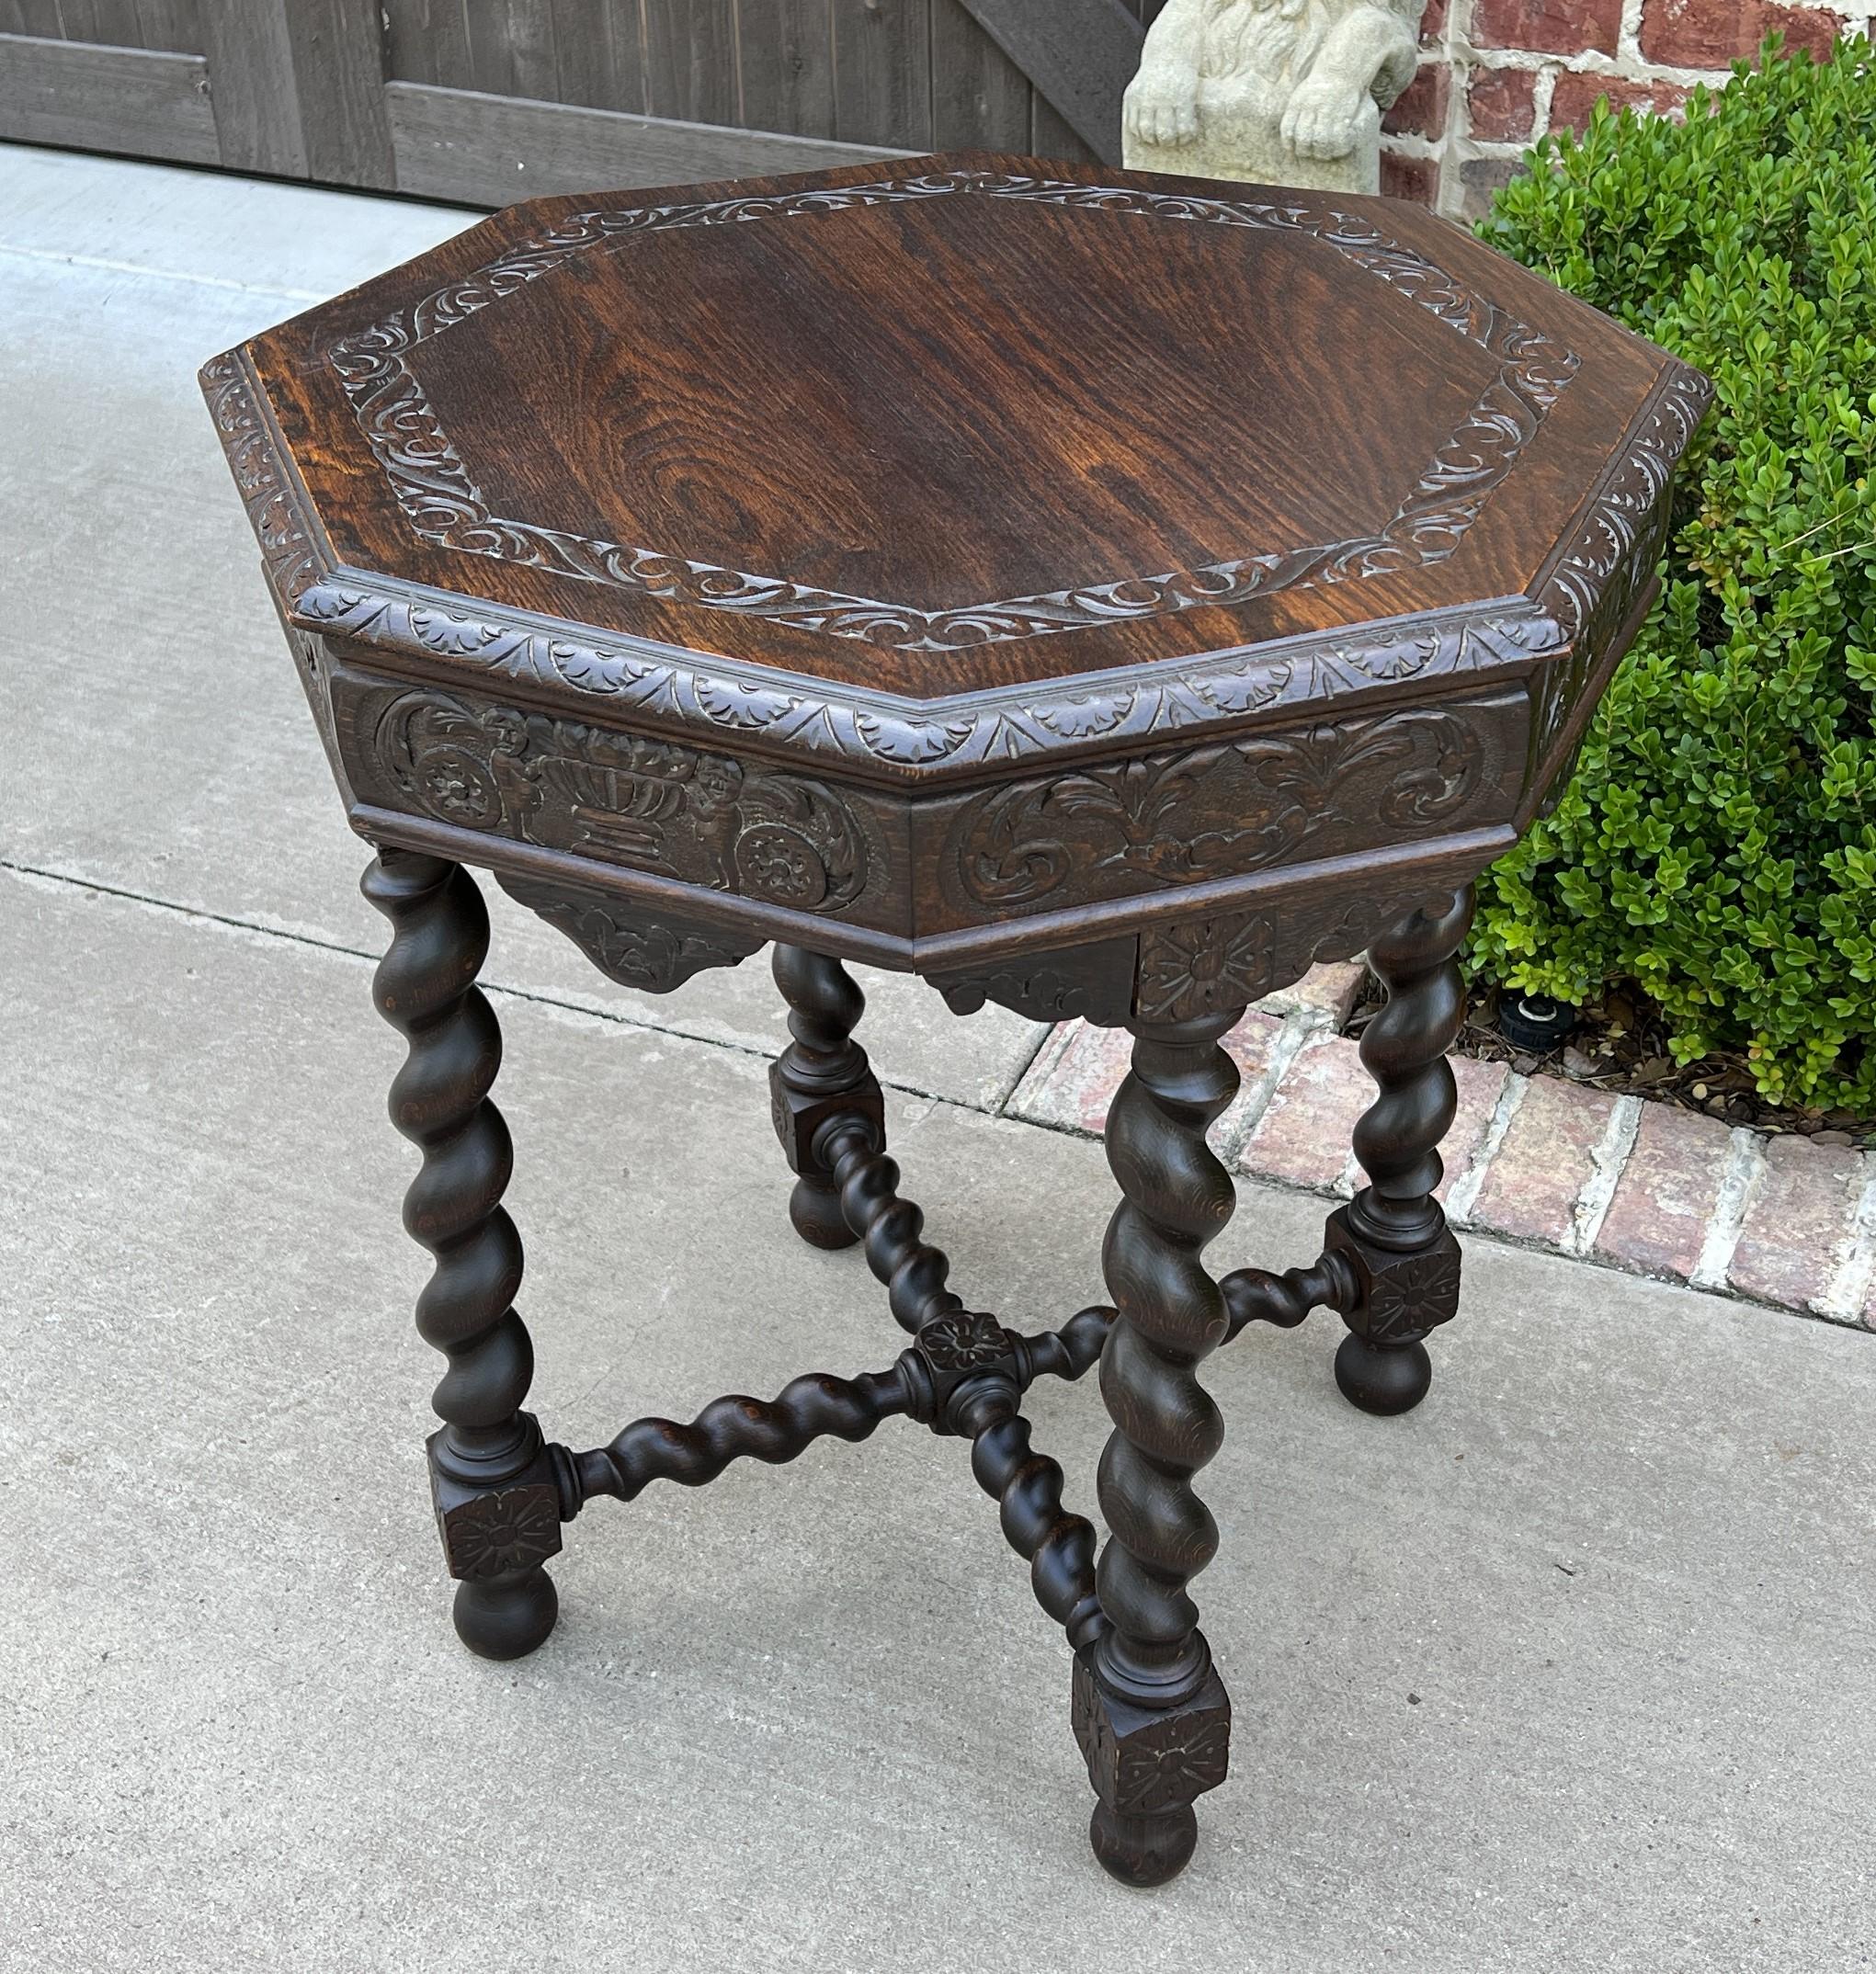 Antique French Table Barley Twist Octagonal Renaissance Revival Oak Carved 19thc For Sale 9